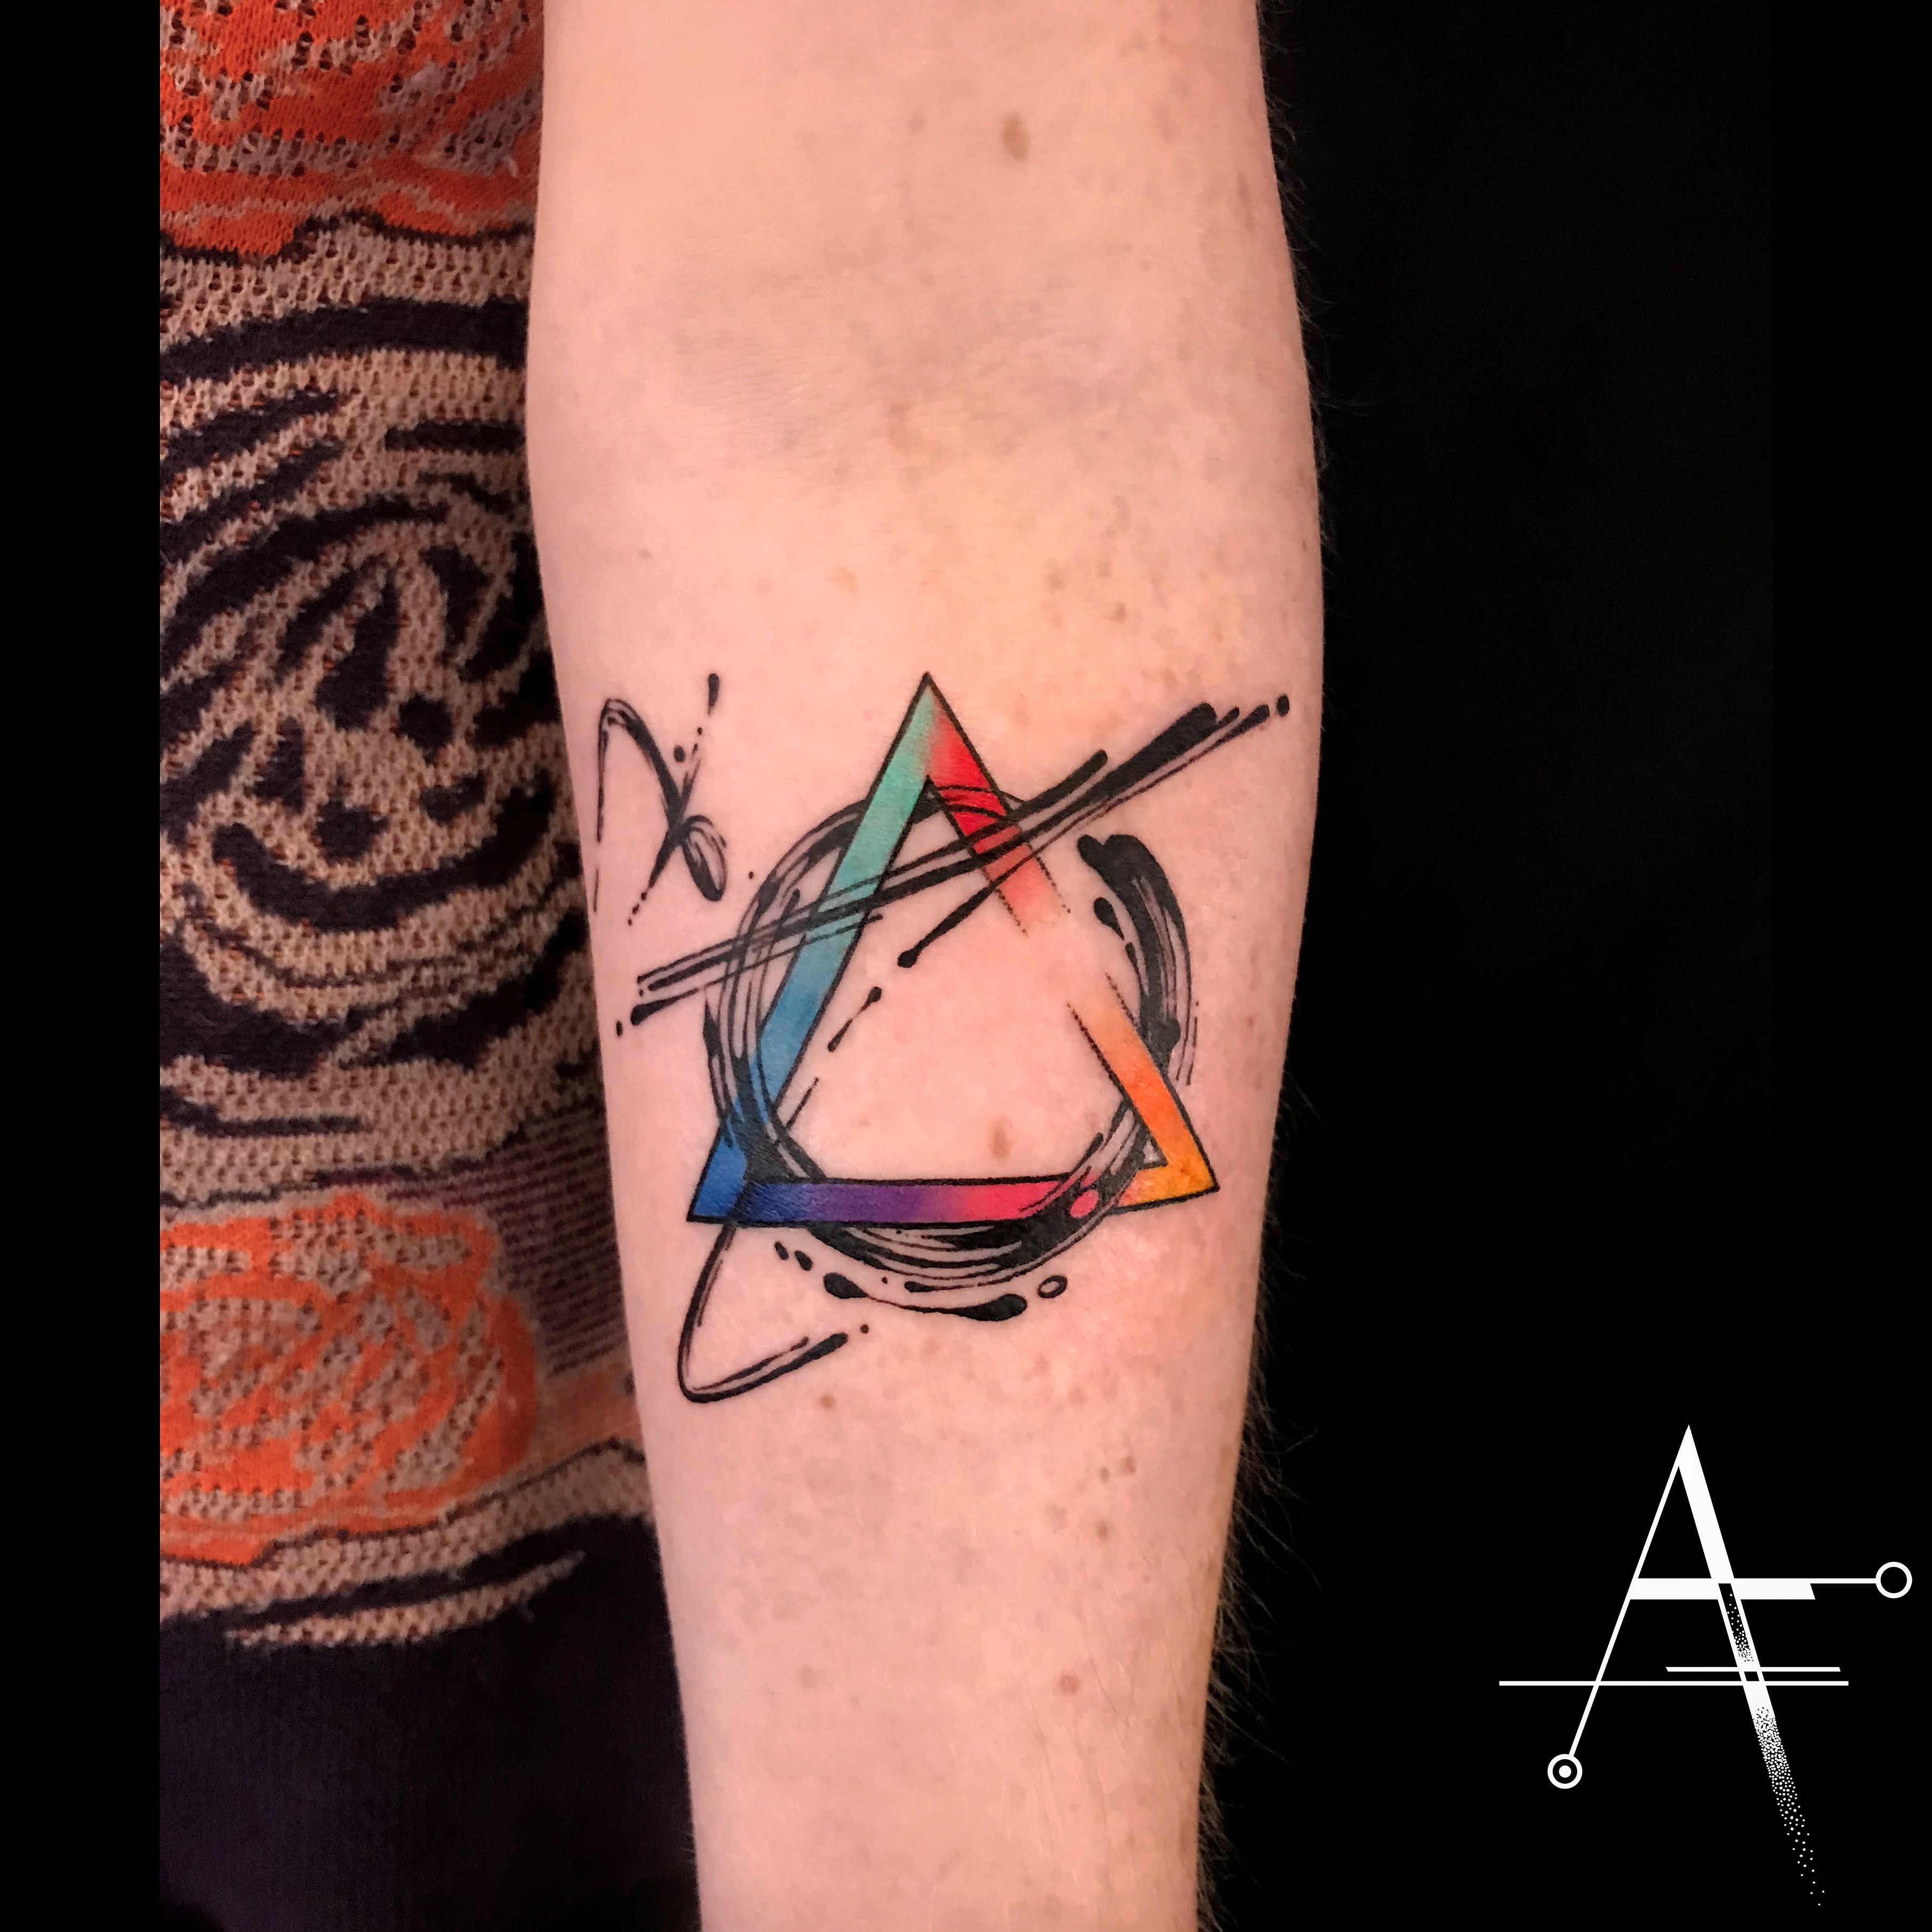 Moon circle triangle tattoo design image Vector Image